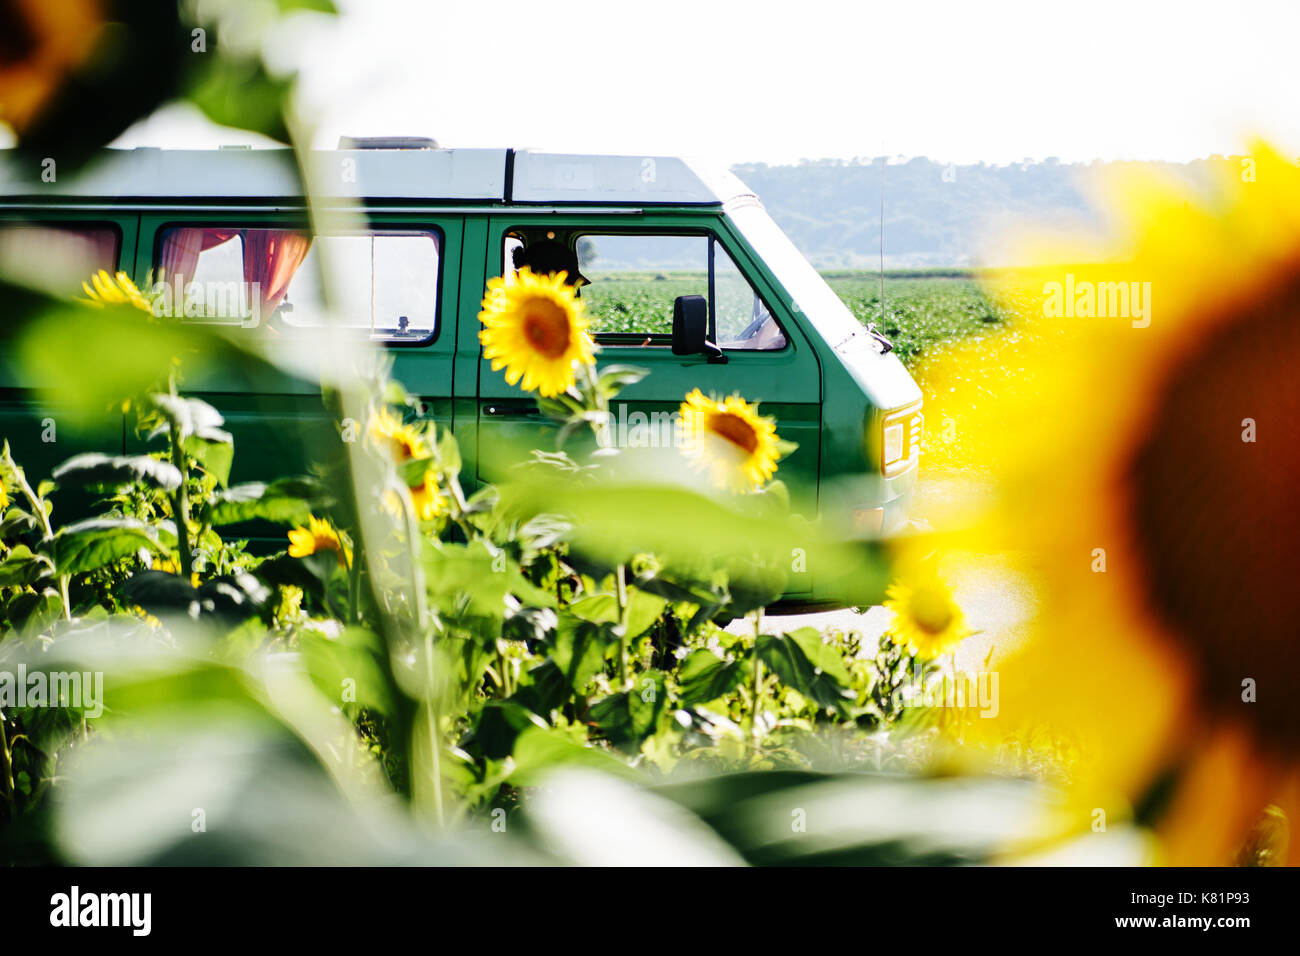 A vintage camper van in a sunflower field Stock Photo